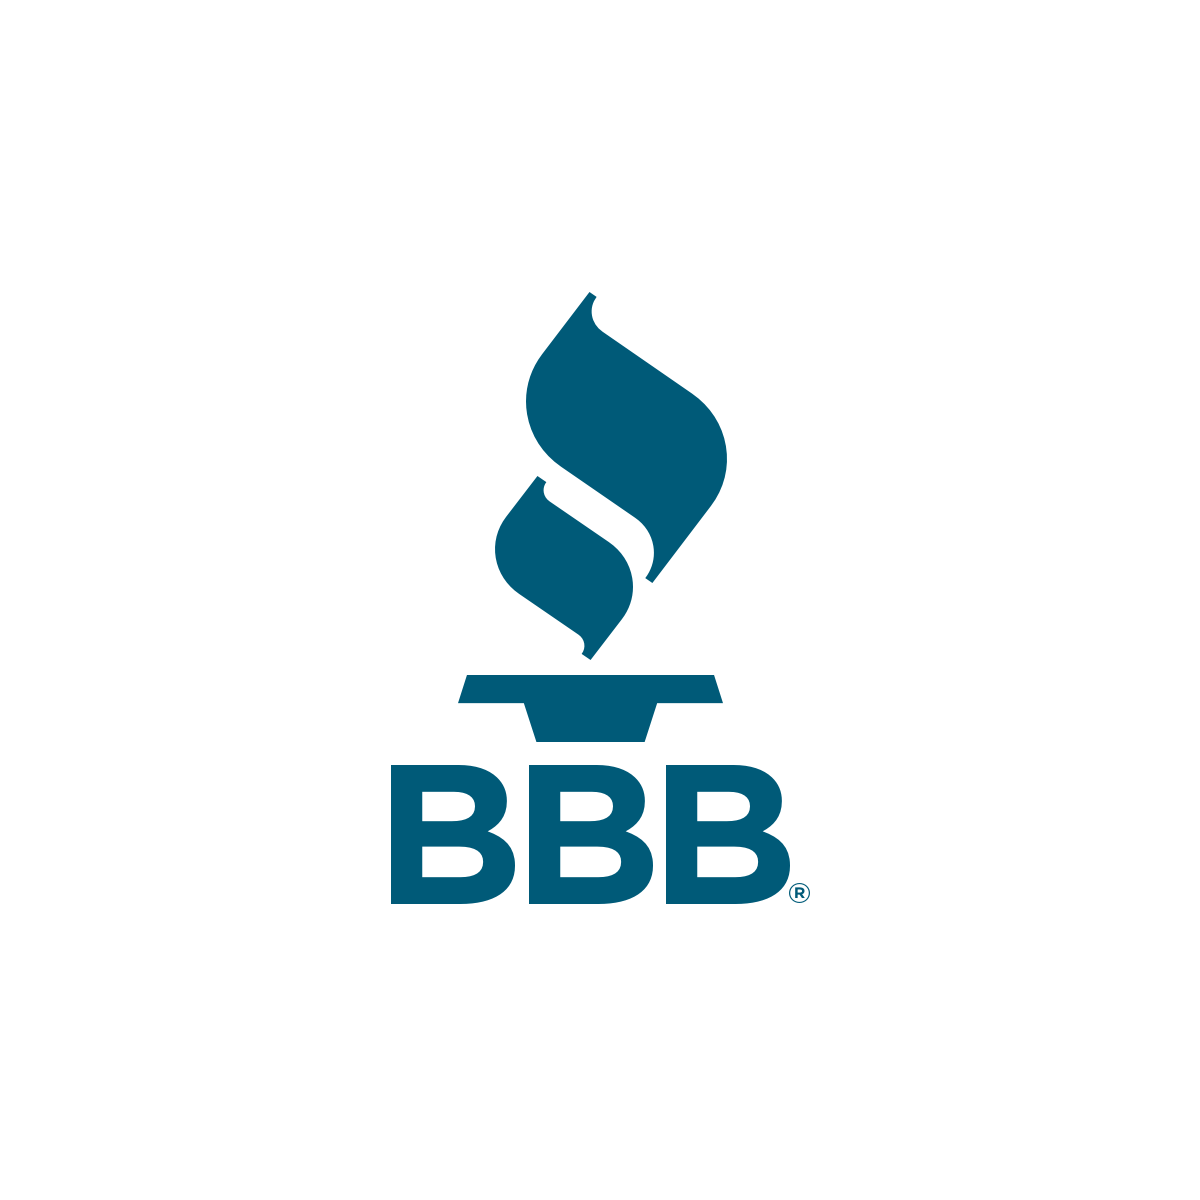 BBB(더 나은 비즈니스 협회)